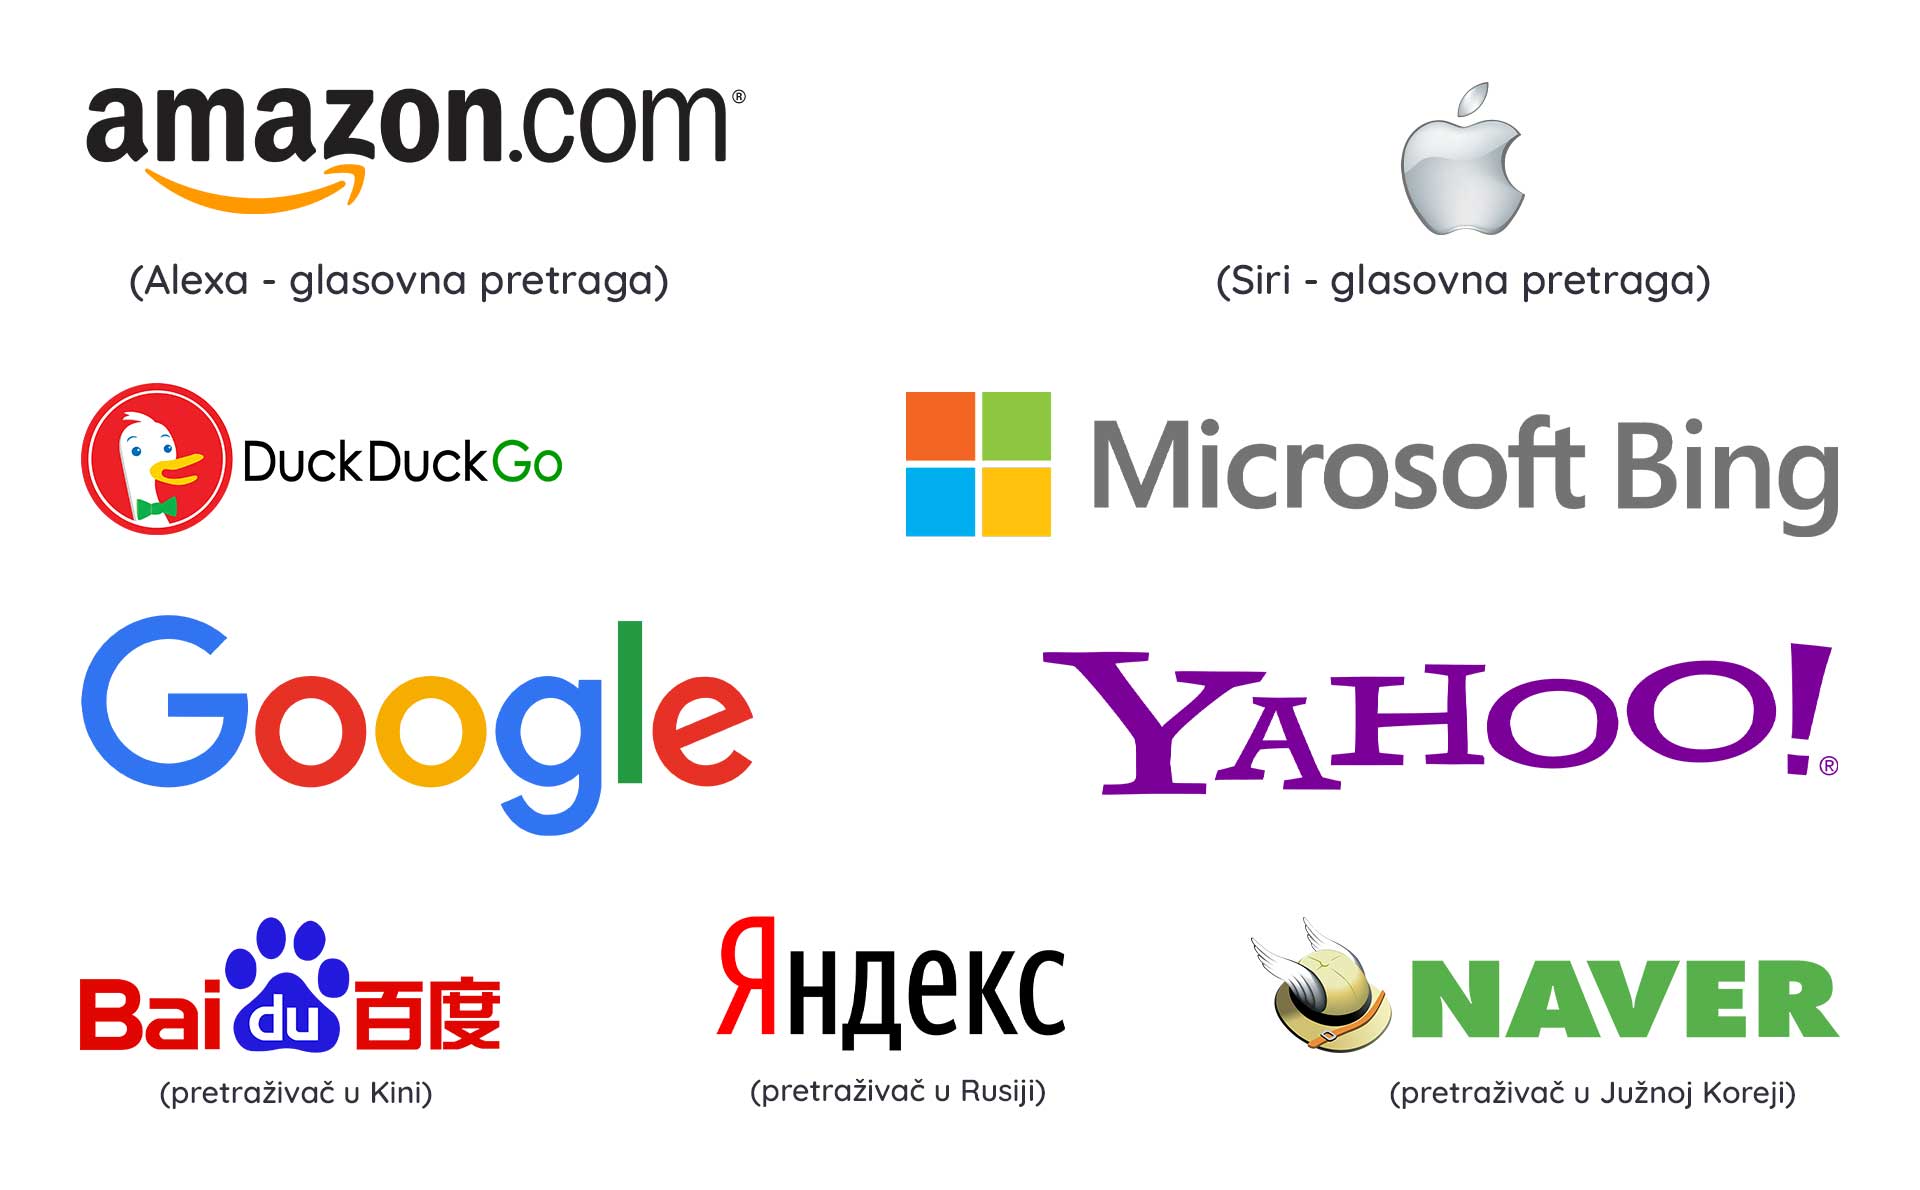 Prikaz Google konkurencije: Aleksa, Siri, DuckDuckGo, Microsoft Bing, Yahoo, Baidu, Jandeks i Naver.